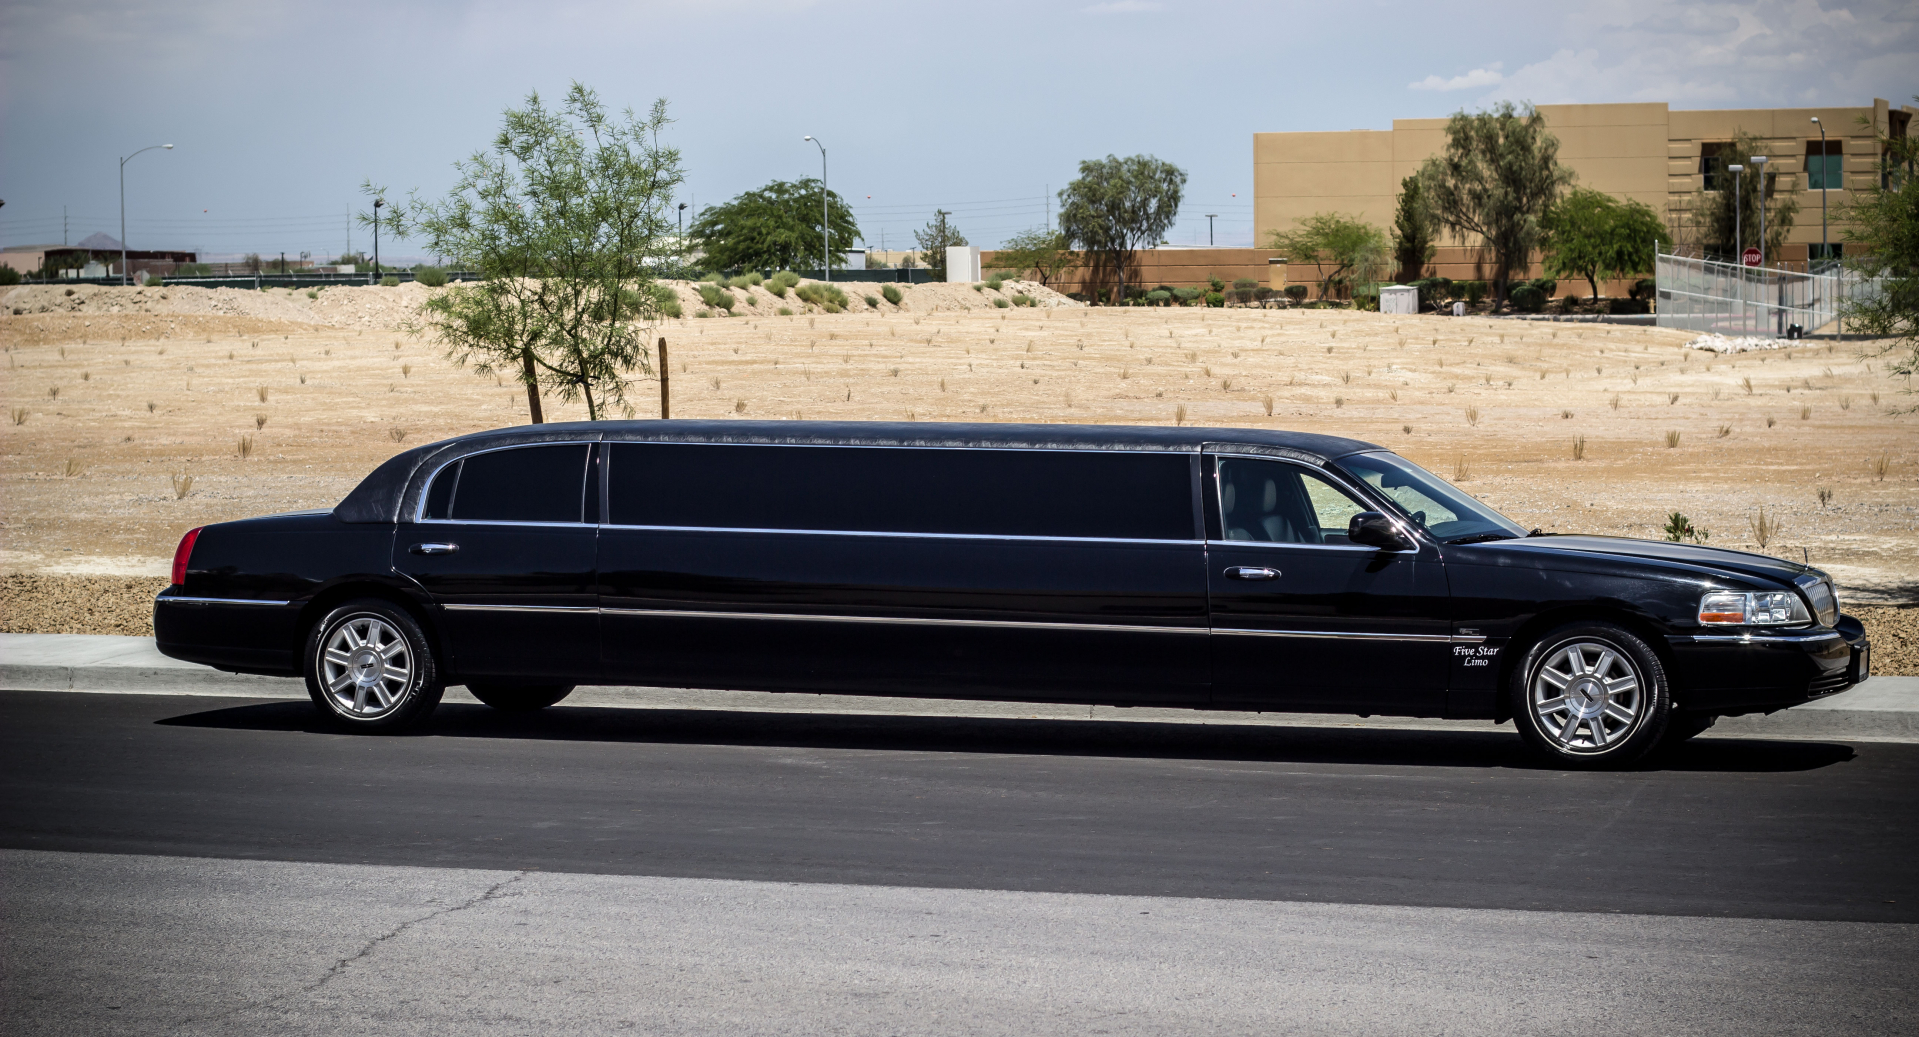 Super Stretch Limousine - 8
Limo /
North Las Vegas, NV

 / Hourly $0.00
